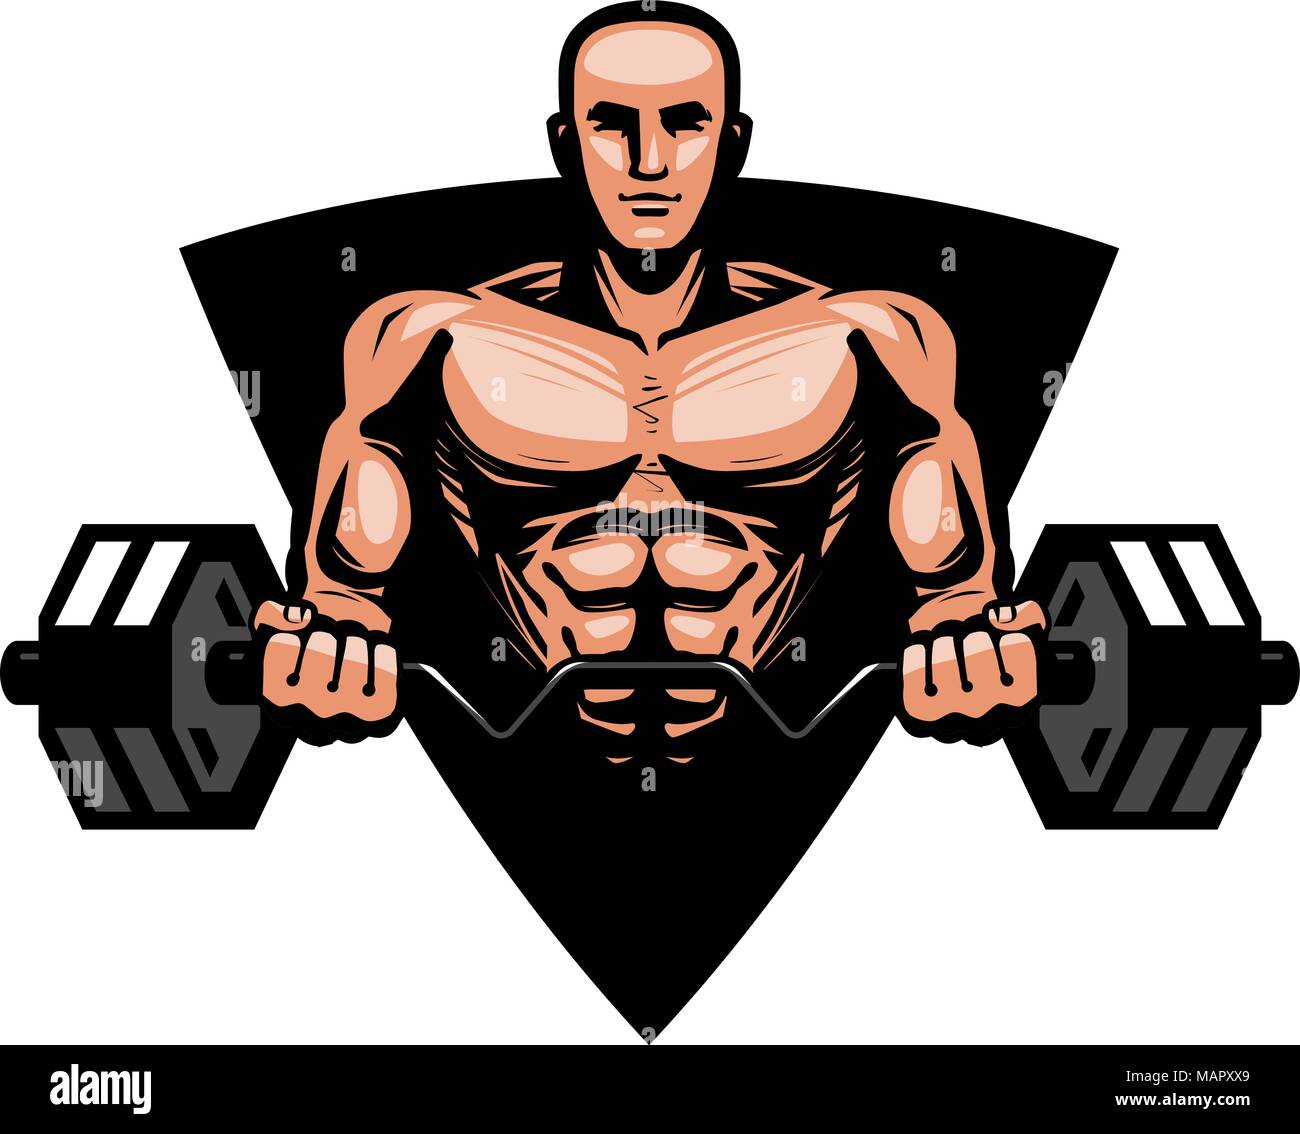 Gym, bodybuilding, fitness logo or label. Muscular man or bodybuilder holding heavy barbell. Vector illustration Stock Vector